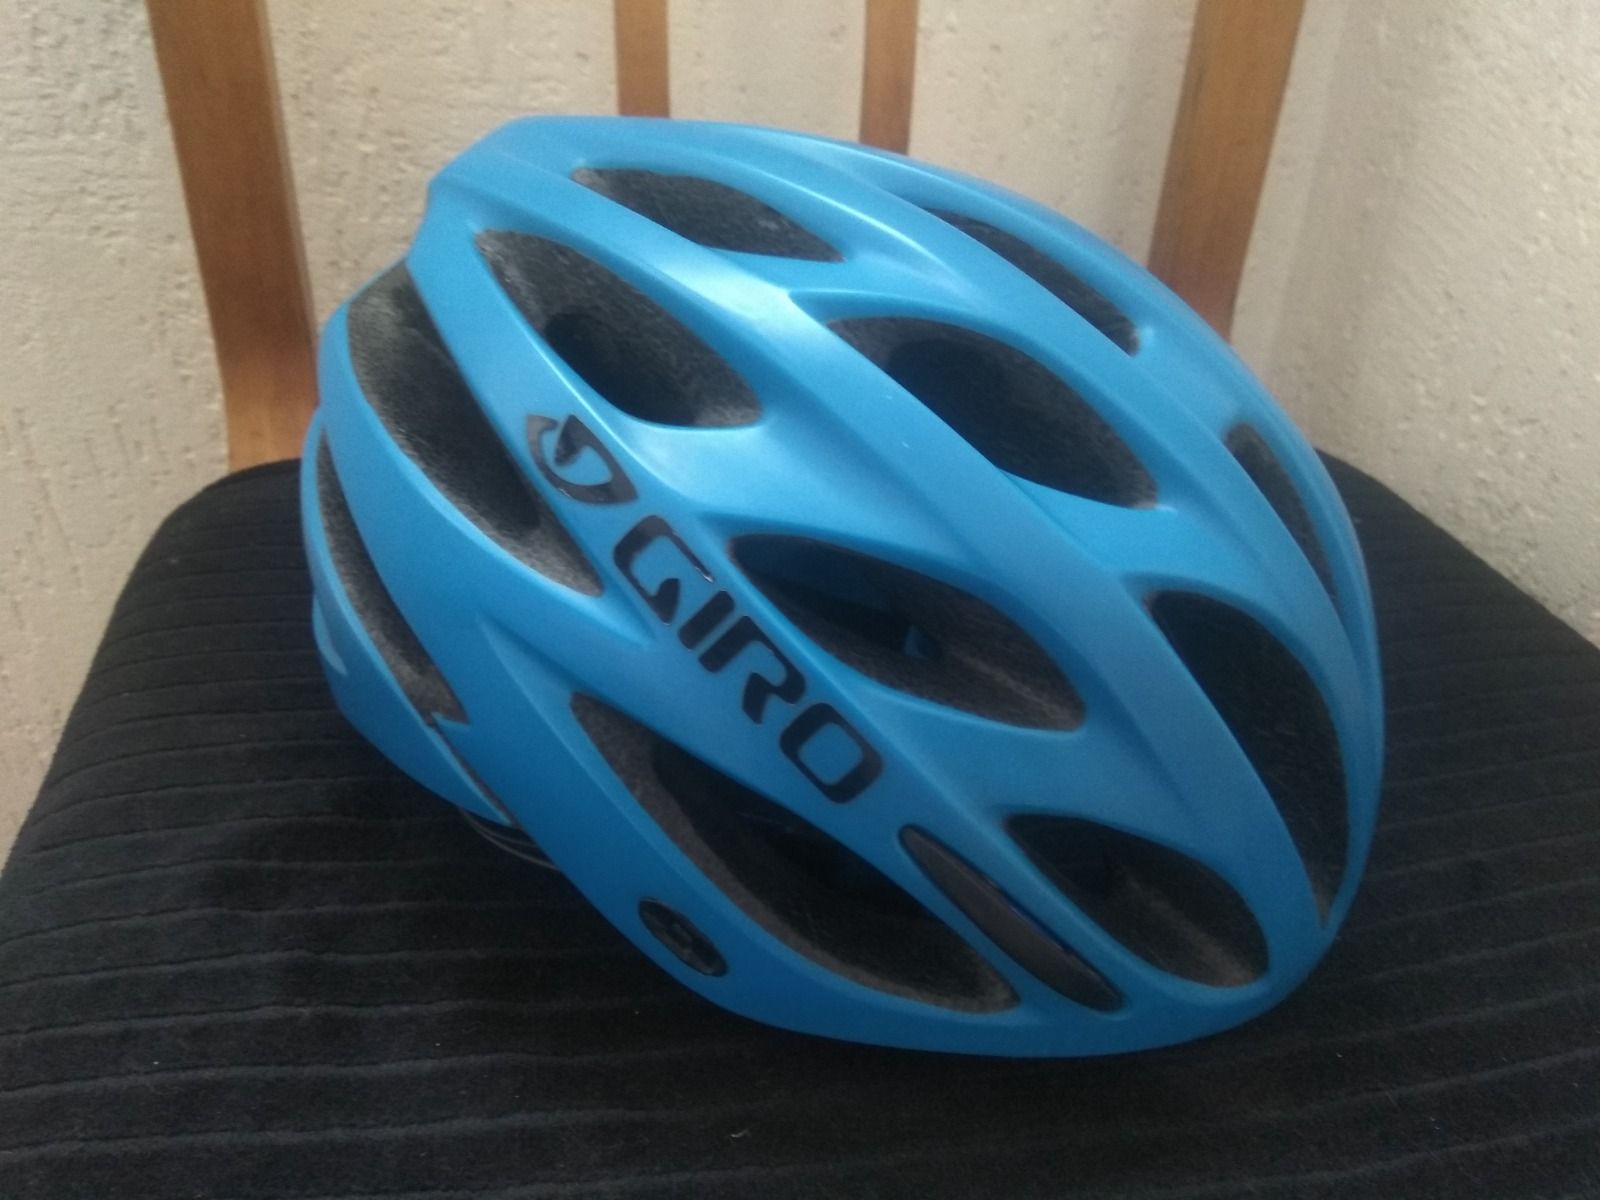 Шлем МТБ Giro Phase